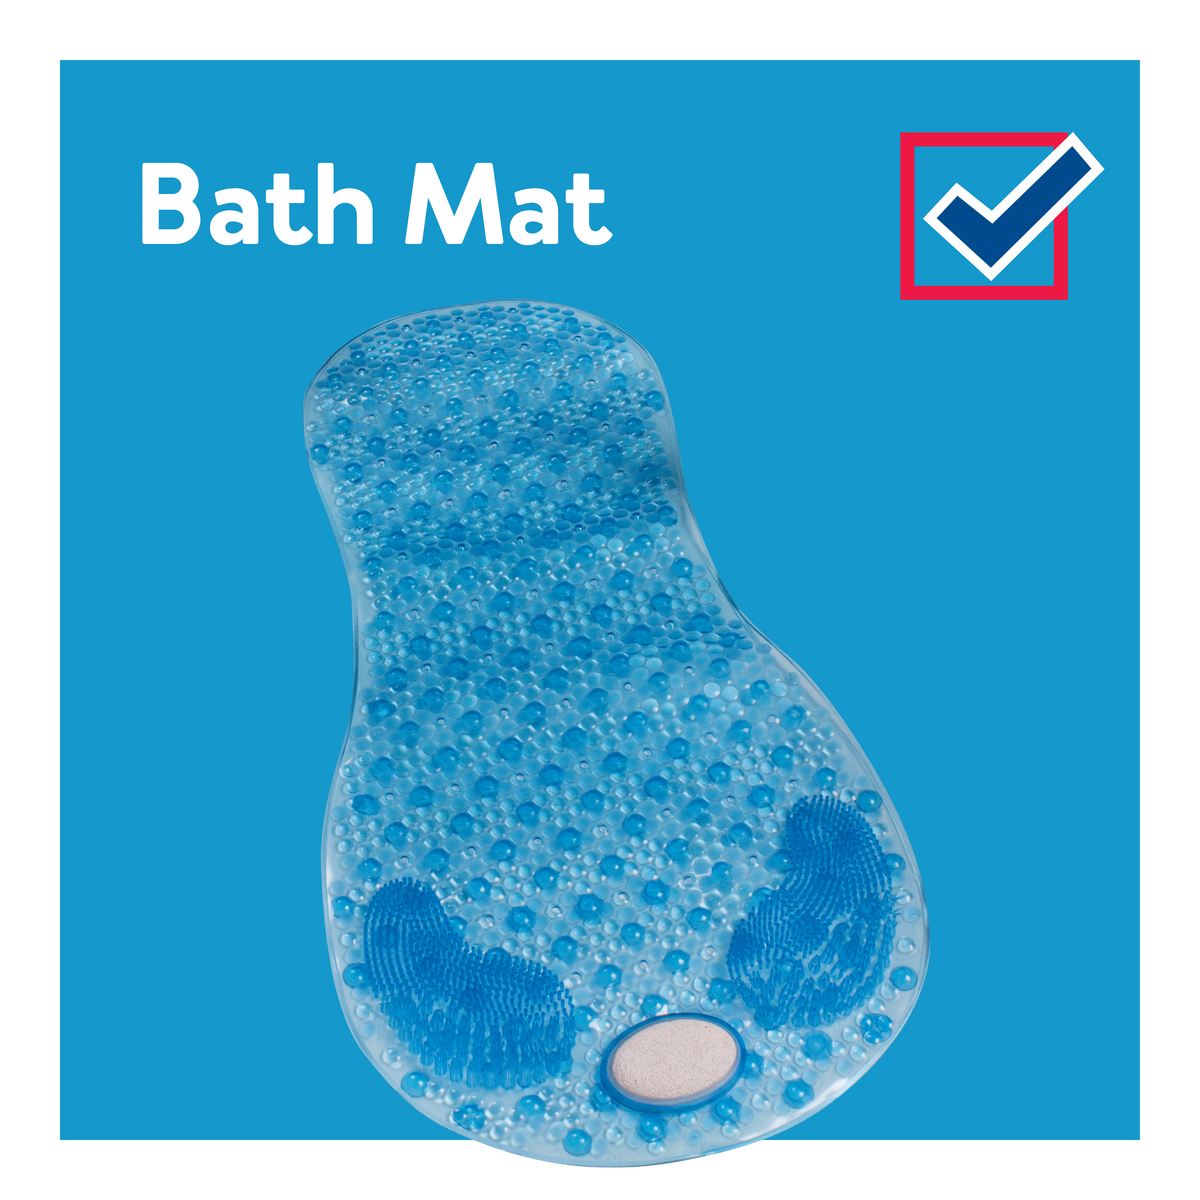 A bath mat on a blue background next to a checkmark